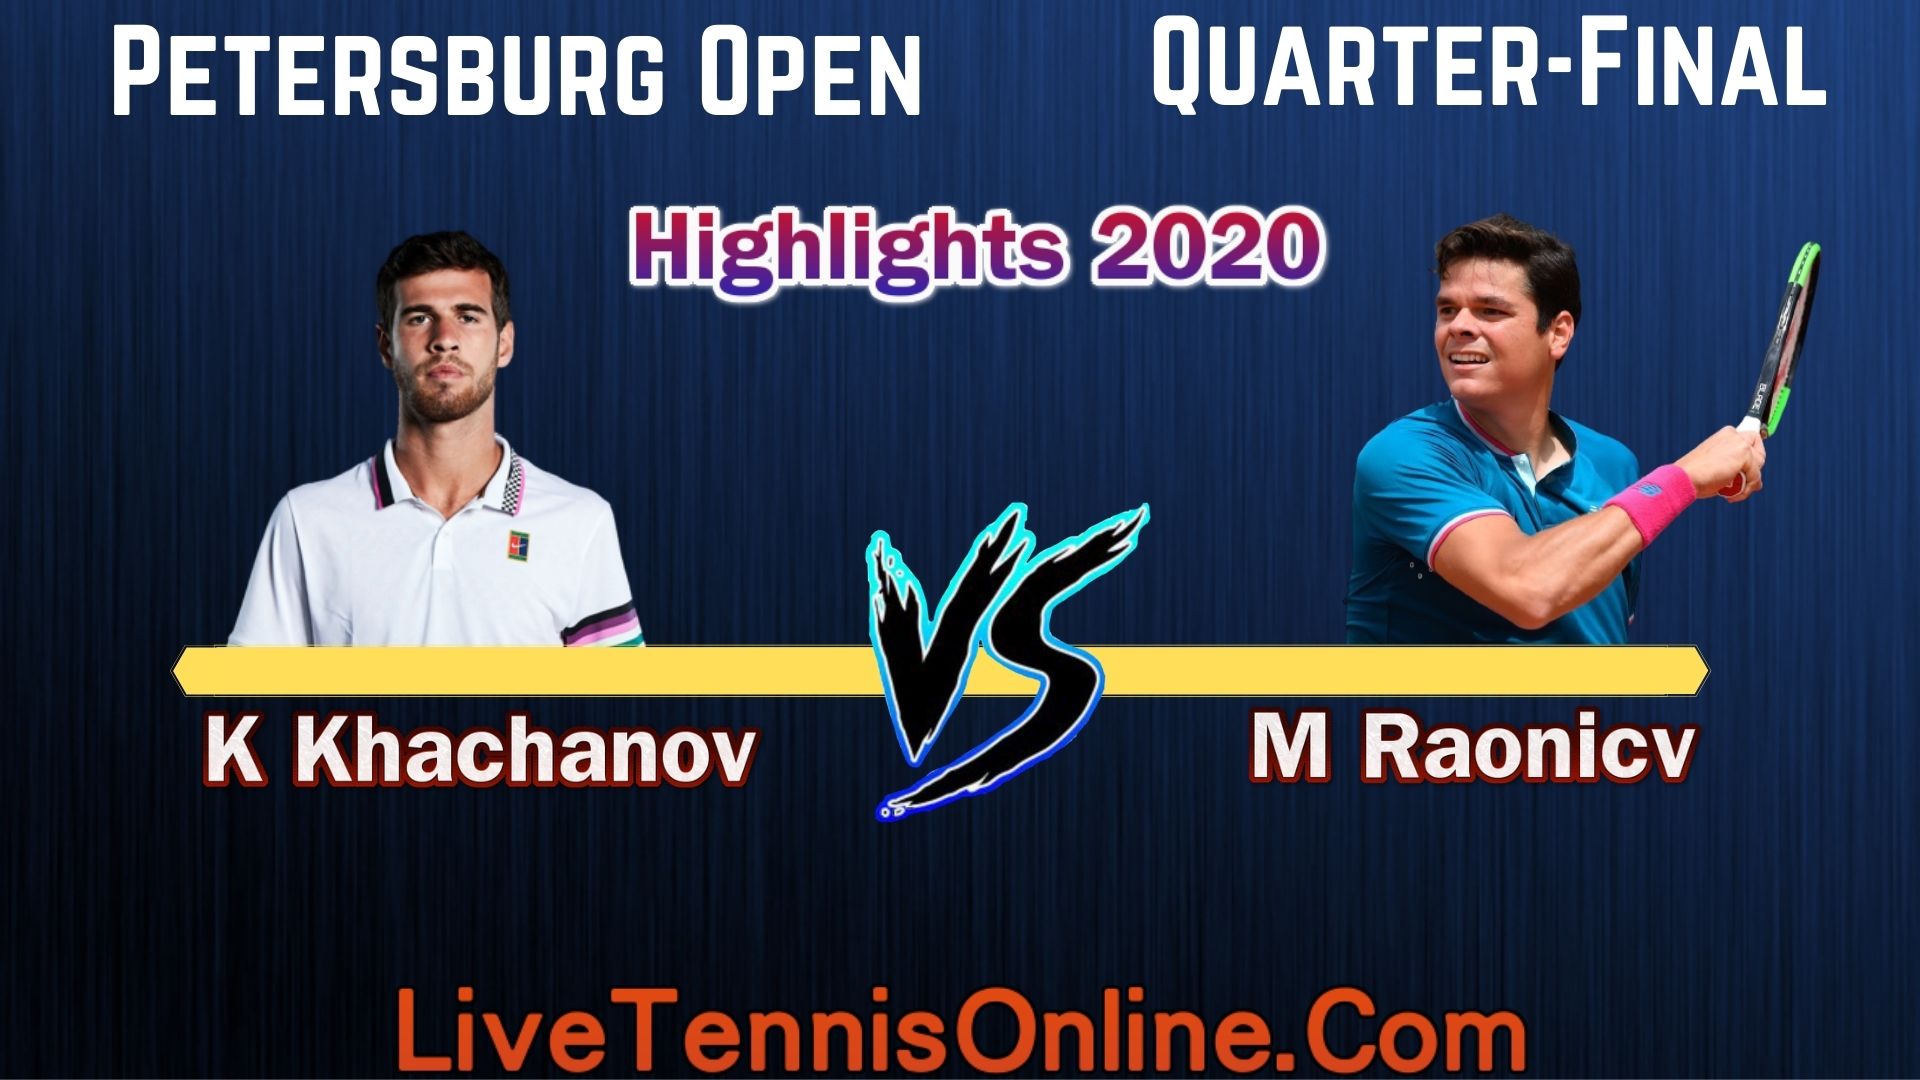 K Khachanov Vs  M Raonic Quarter Final Highlights 2020  Petersburg Open